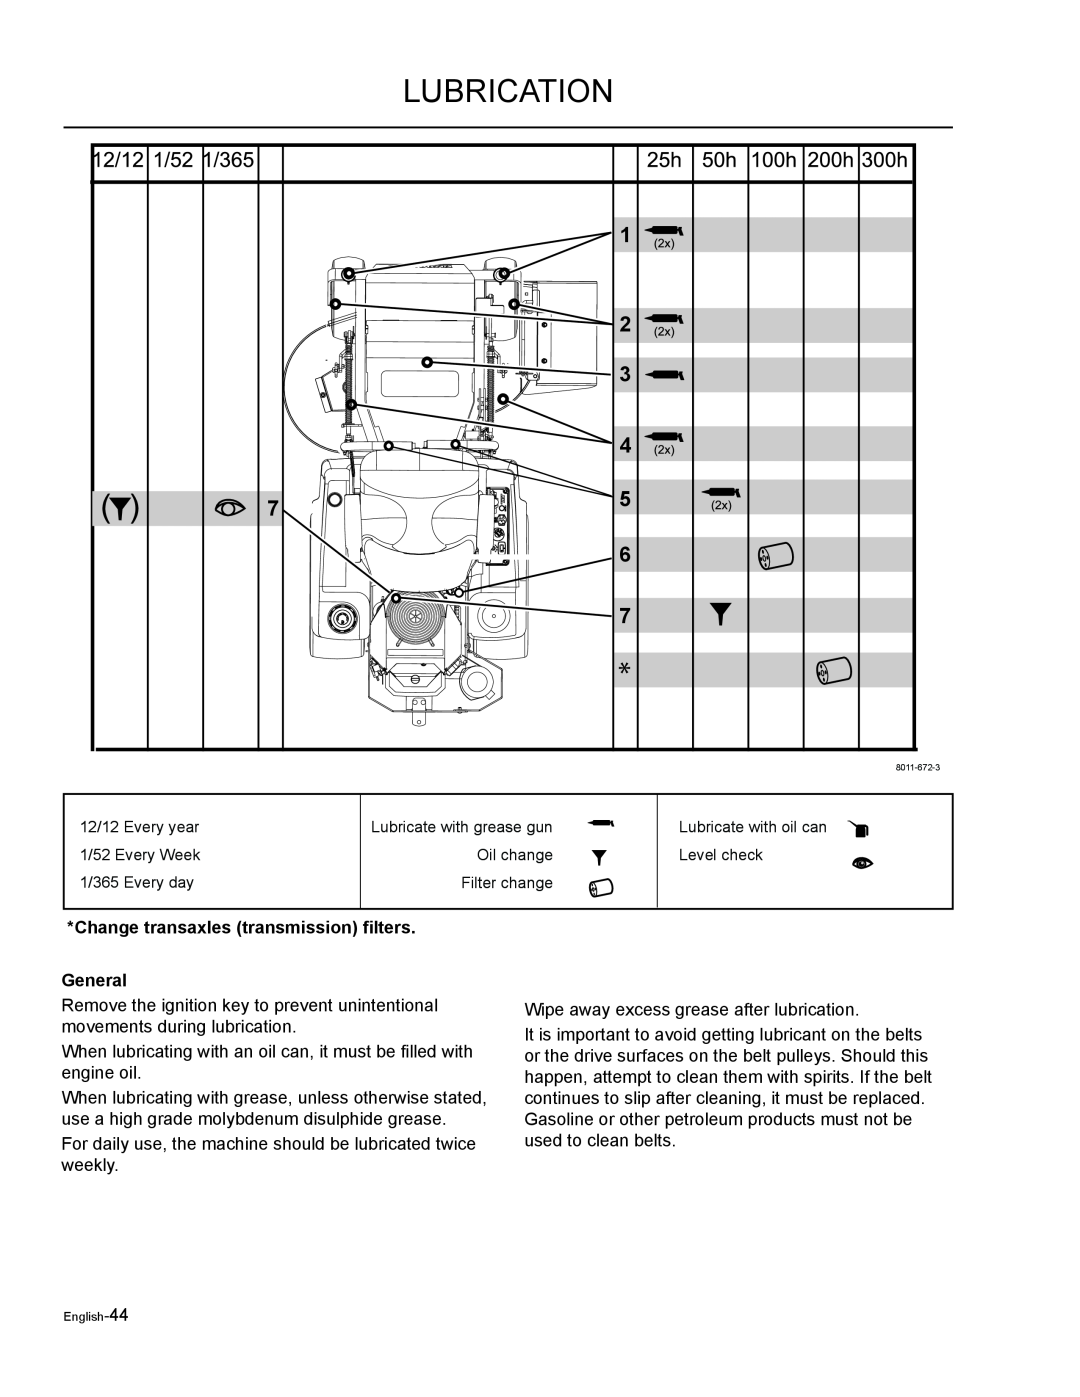 Husqvarna EZF 3417/ 965879301 manual Lubrication, Change transaxles transmission filters, General 